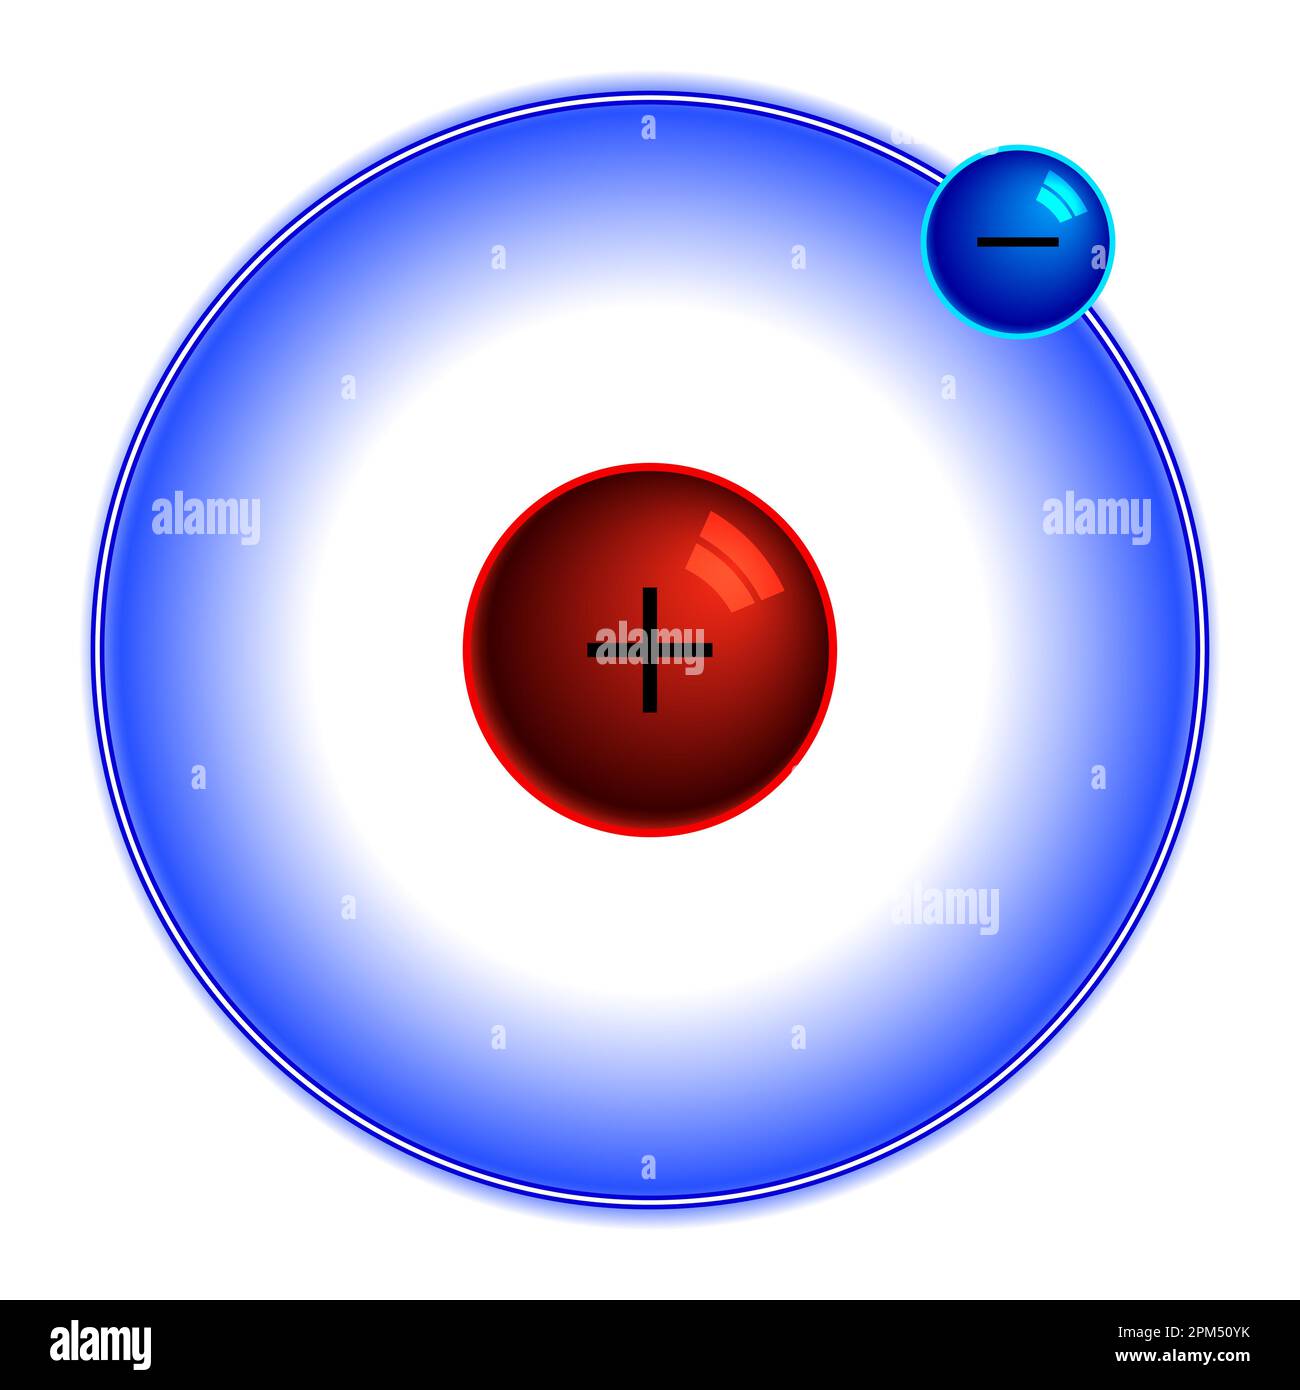 Abstract hydrogen atom concept illustration Stock Vector Image & Art ...